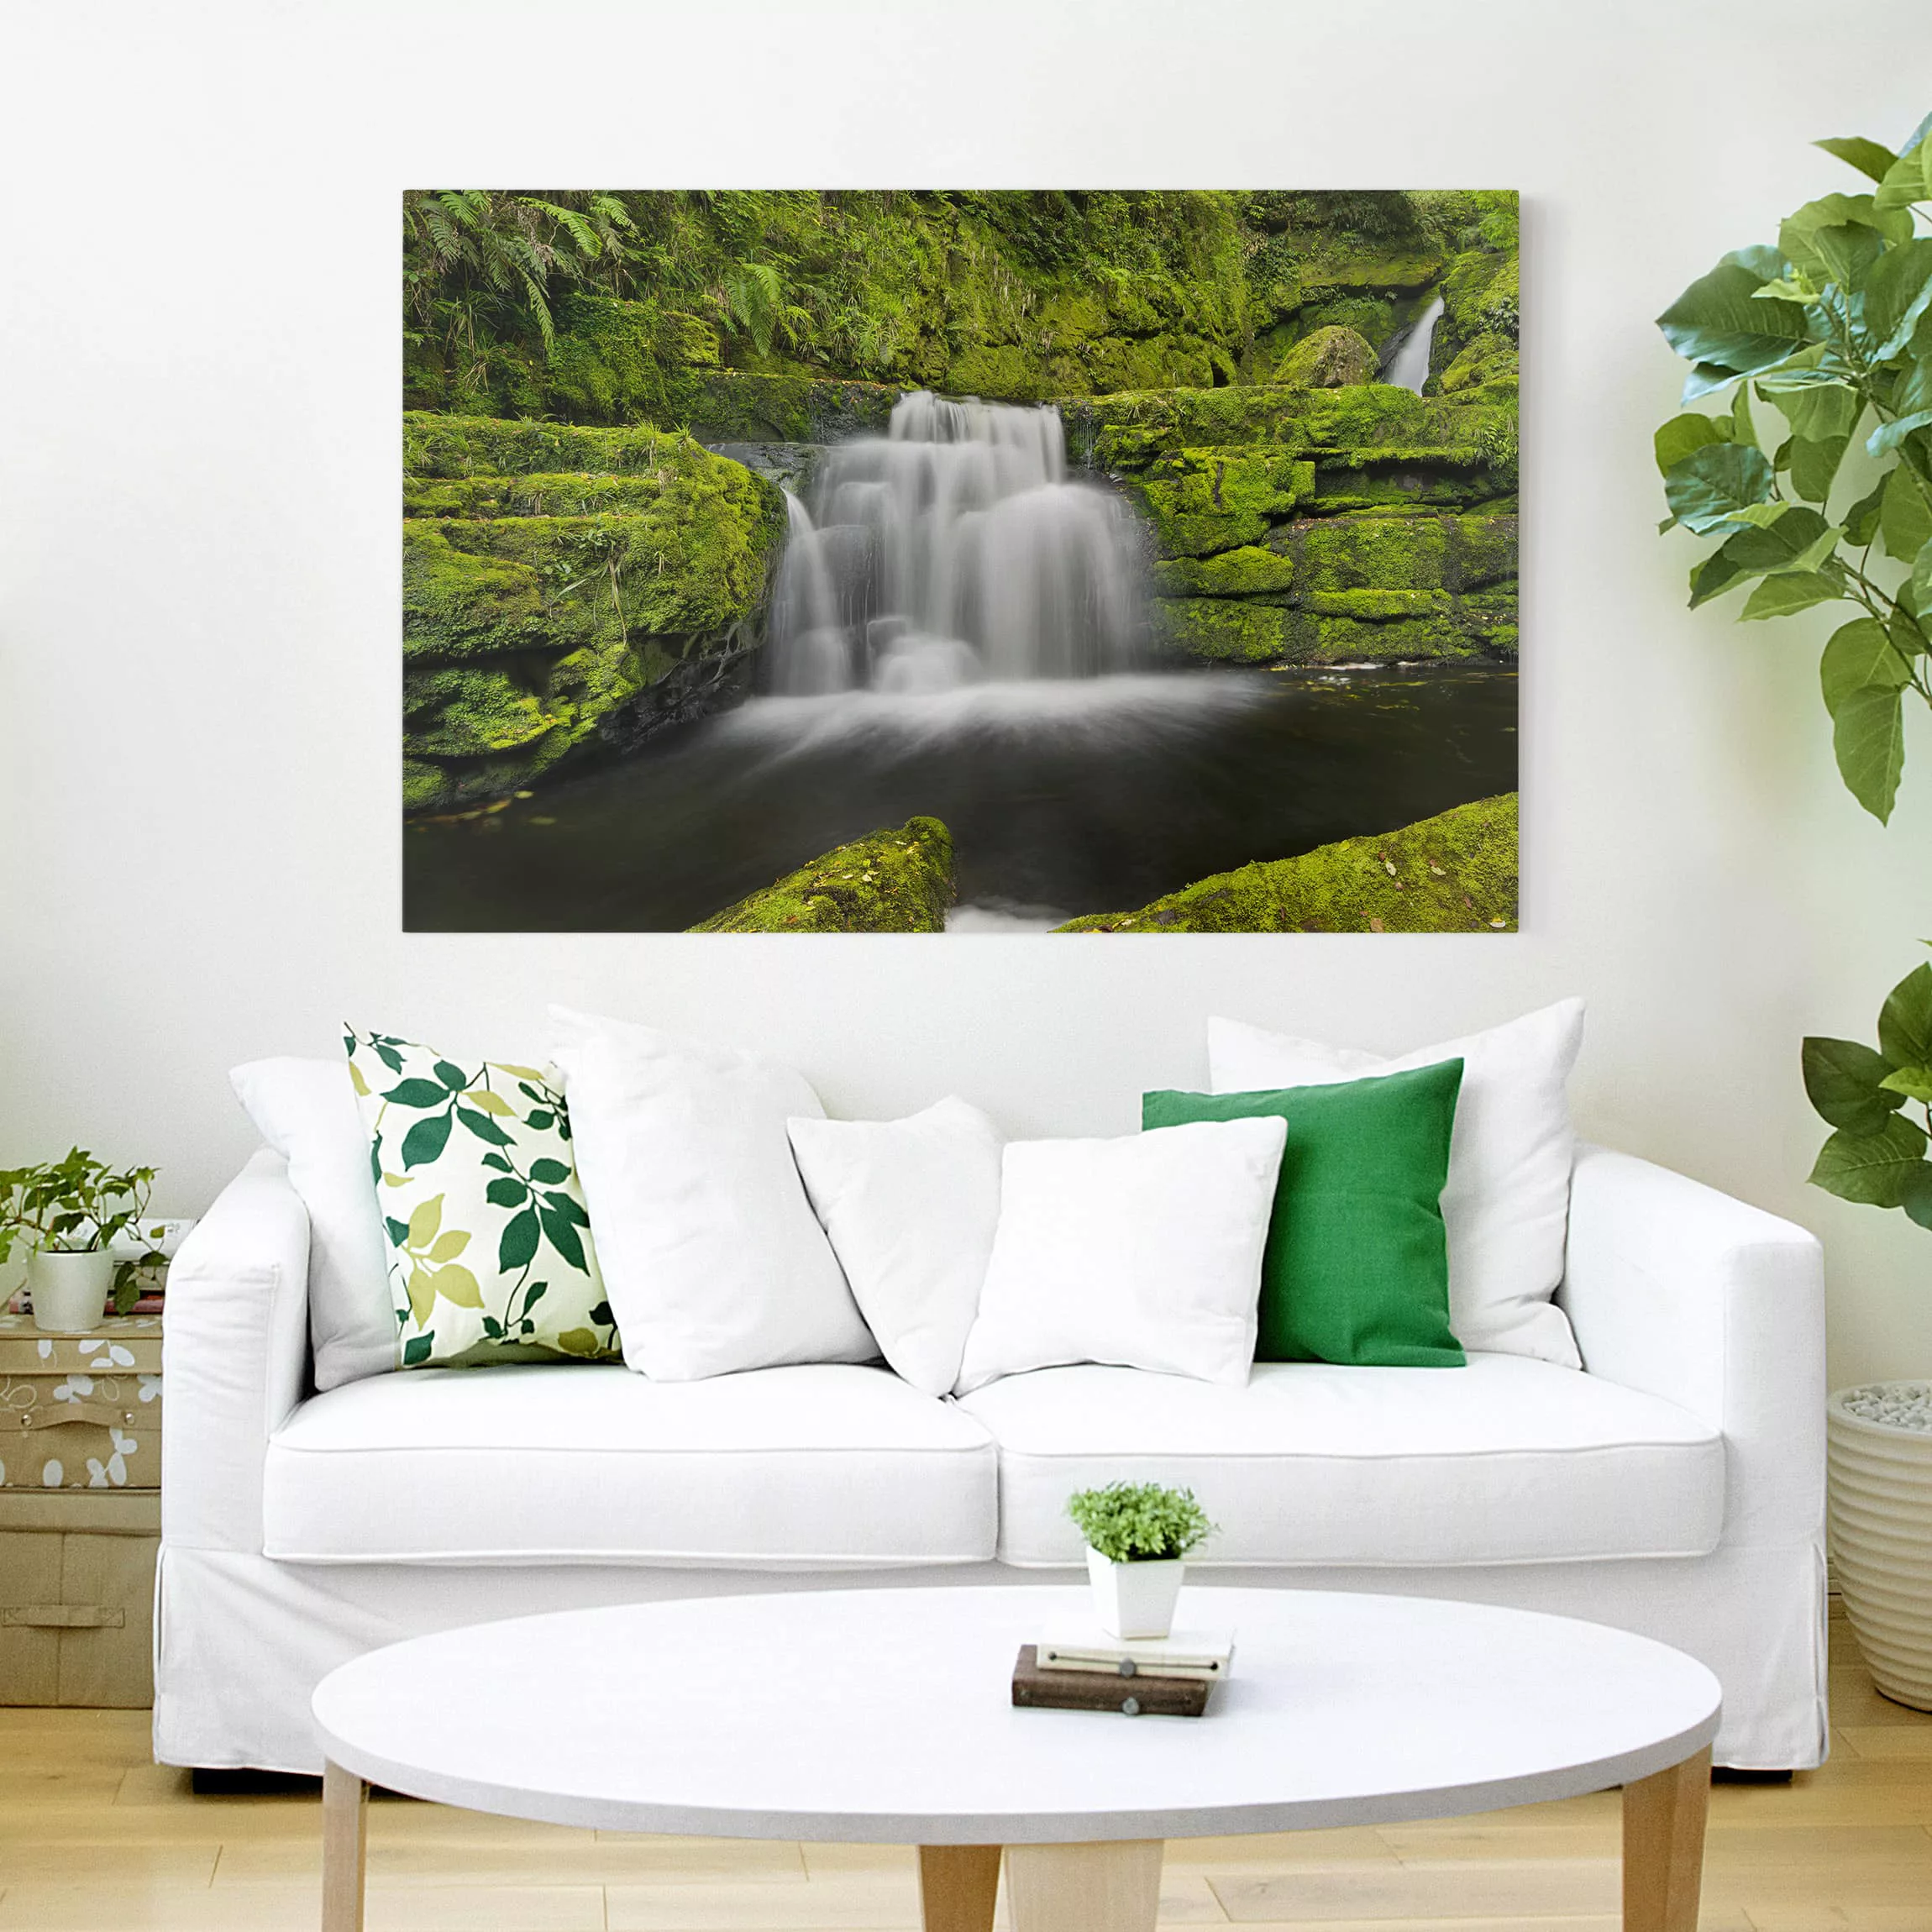 Leinwandbild Natur & Landschaft - Querformat Lower McLean Falls in Neuseela günstig online kaufen